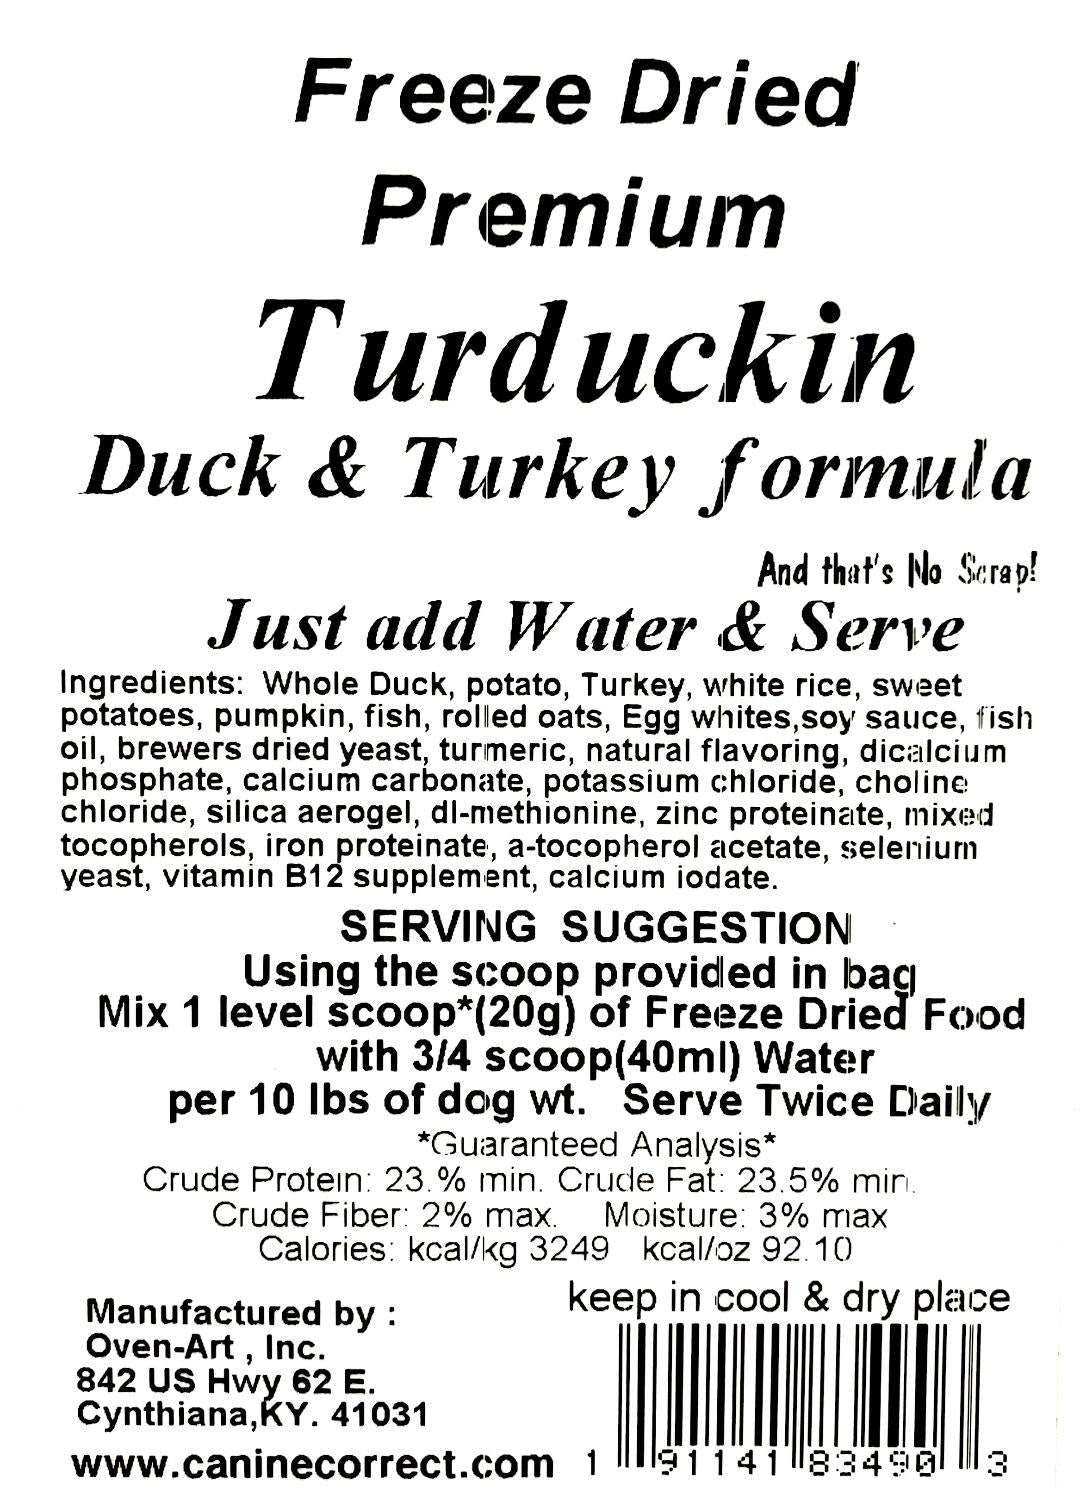 Canine Correct Premium Turduckin (Duck & Turkey) Formula